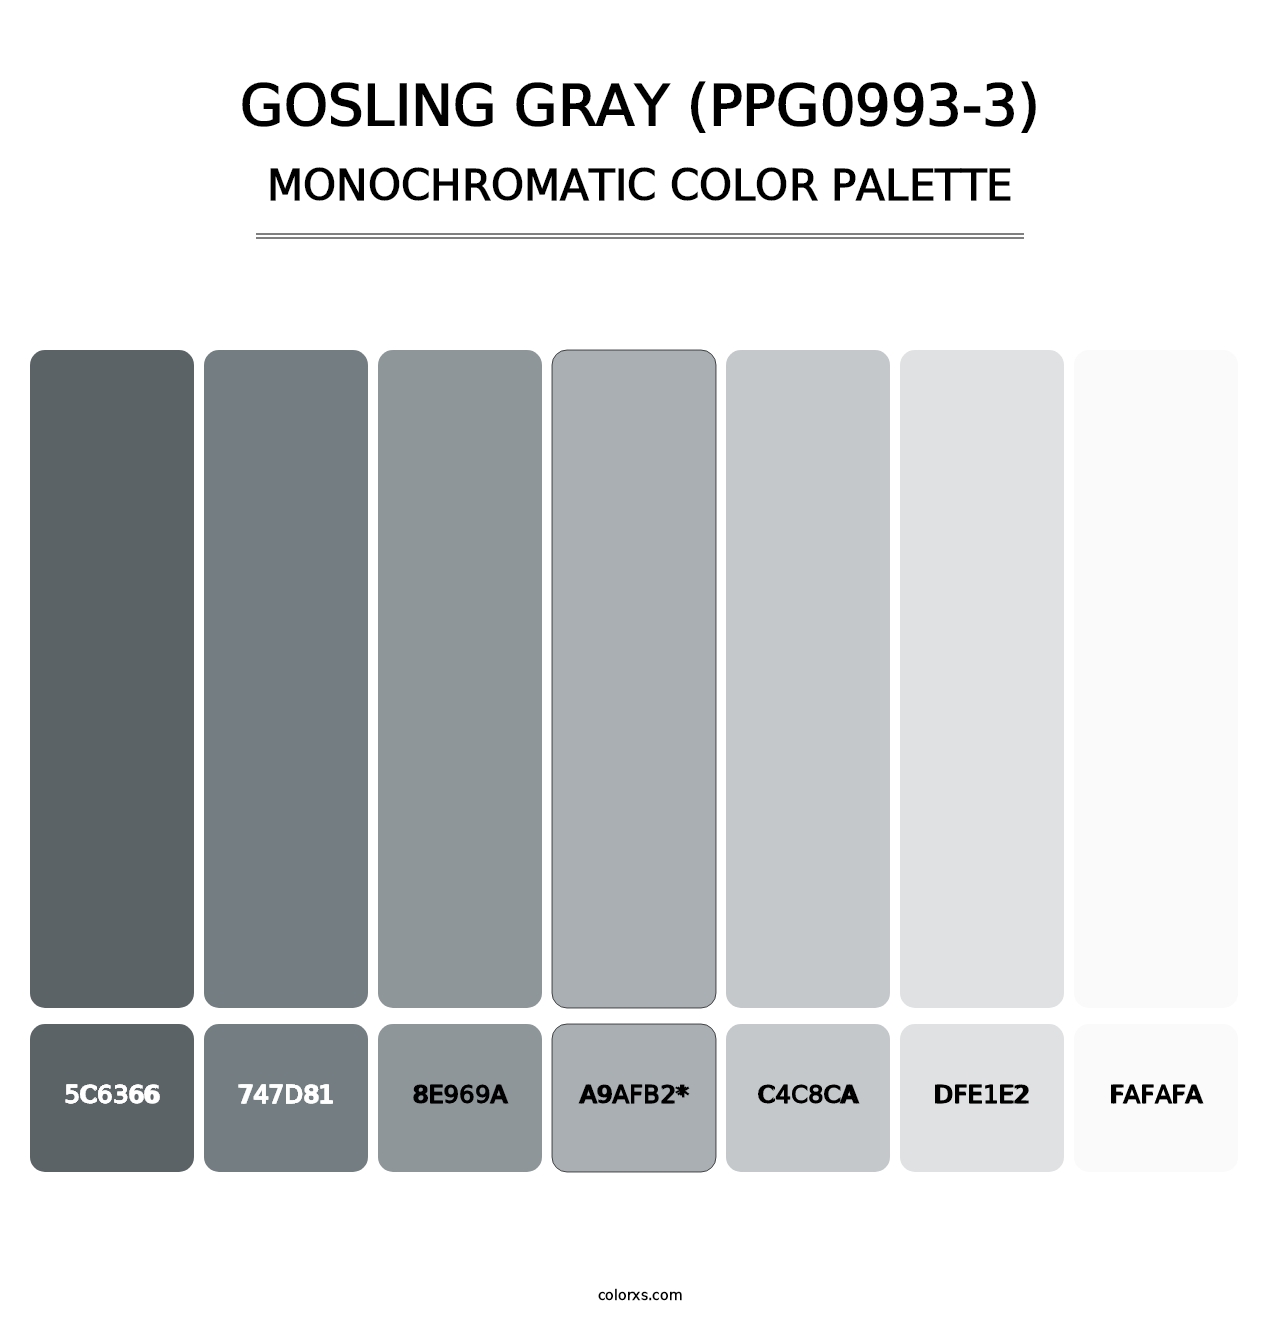 Gosling Gray (PPG0993-3) - Monochromatic Color Palette